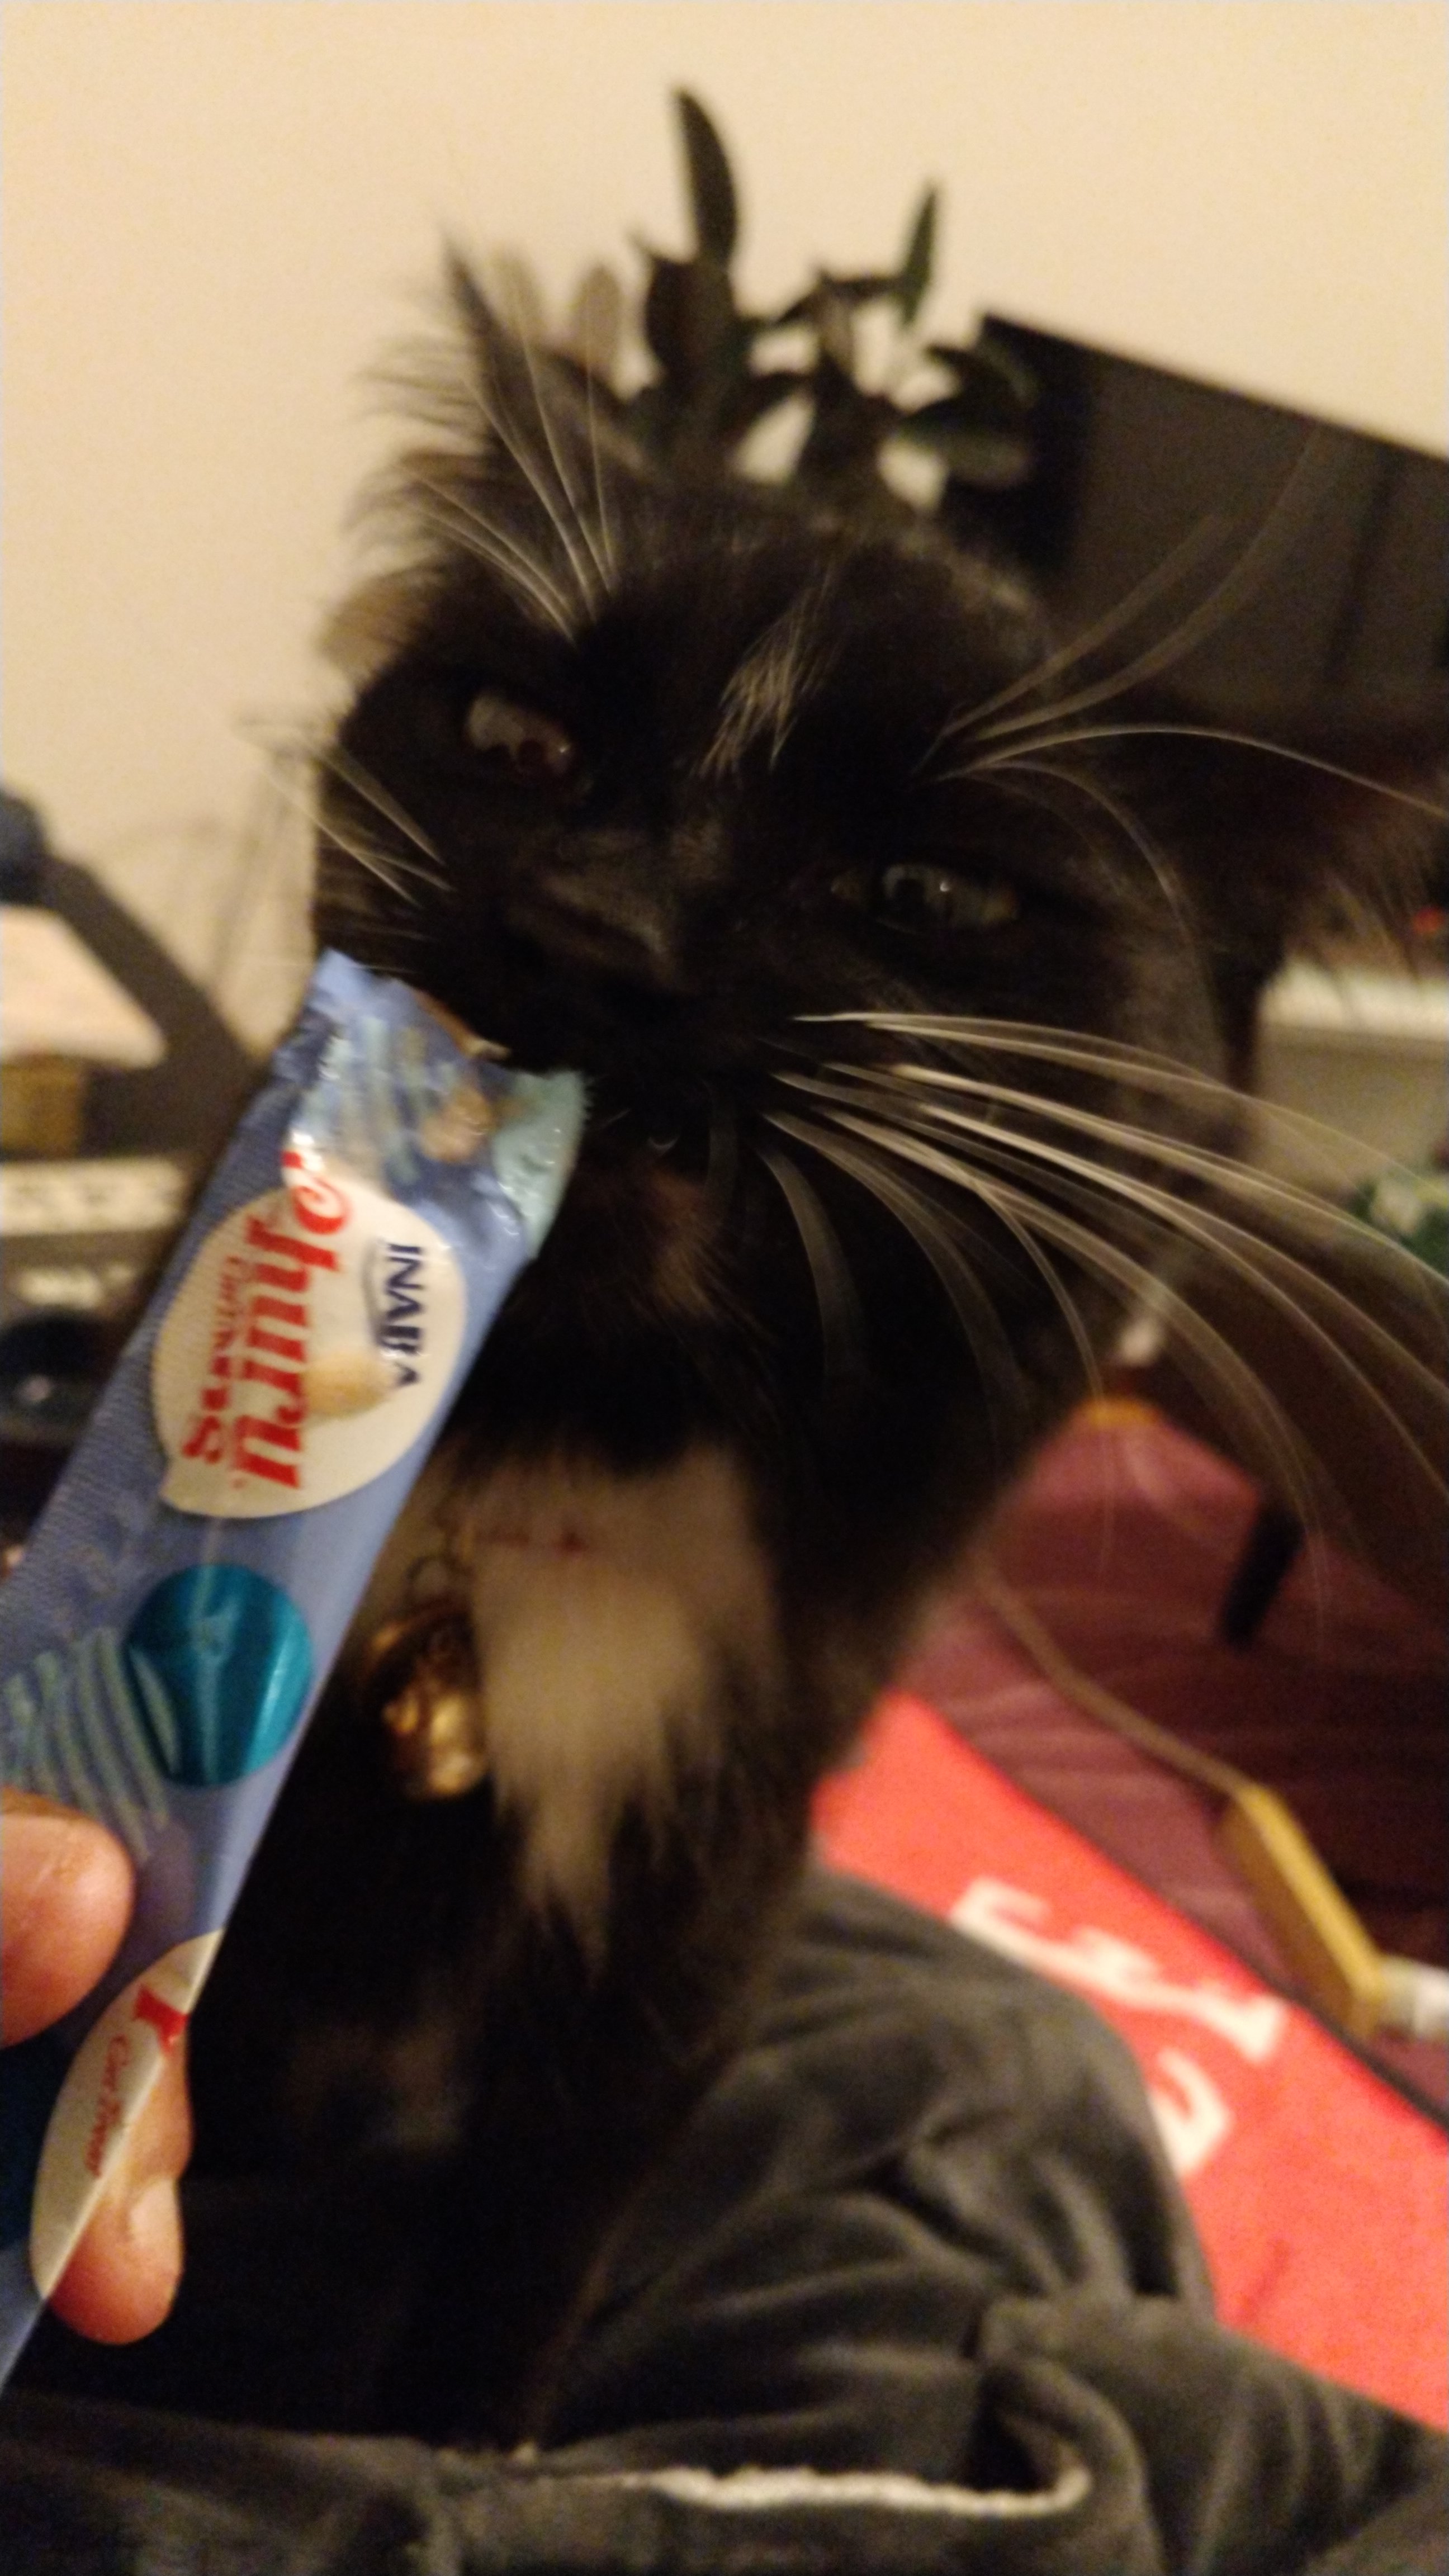 close up of cat face furiously demolishing a chewed up tube of churu